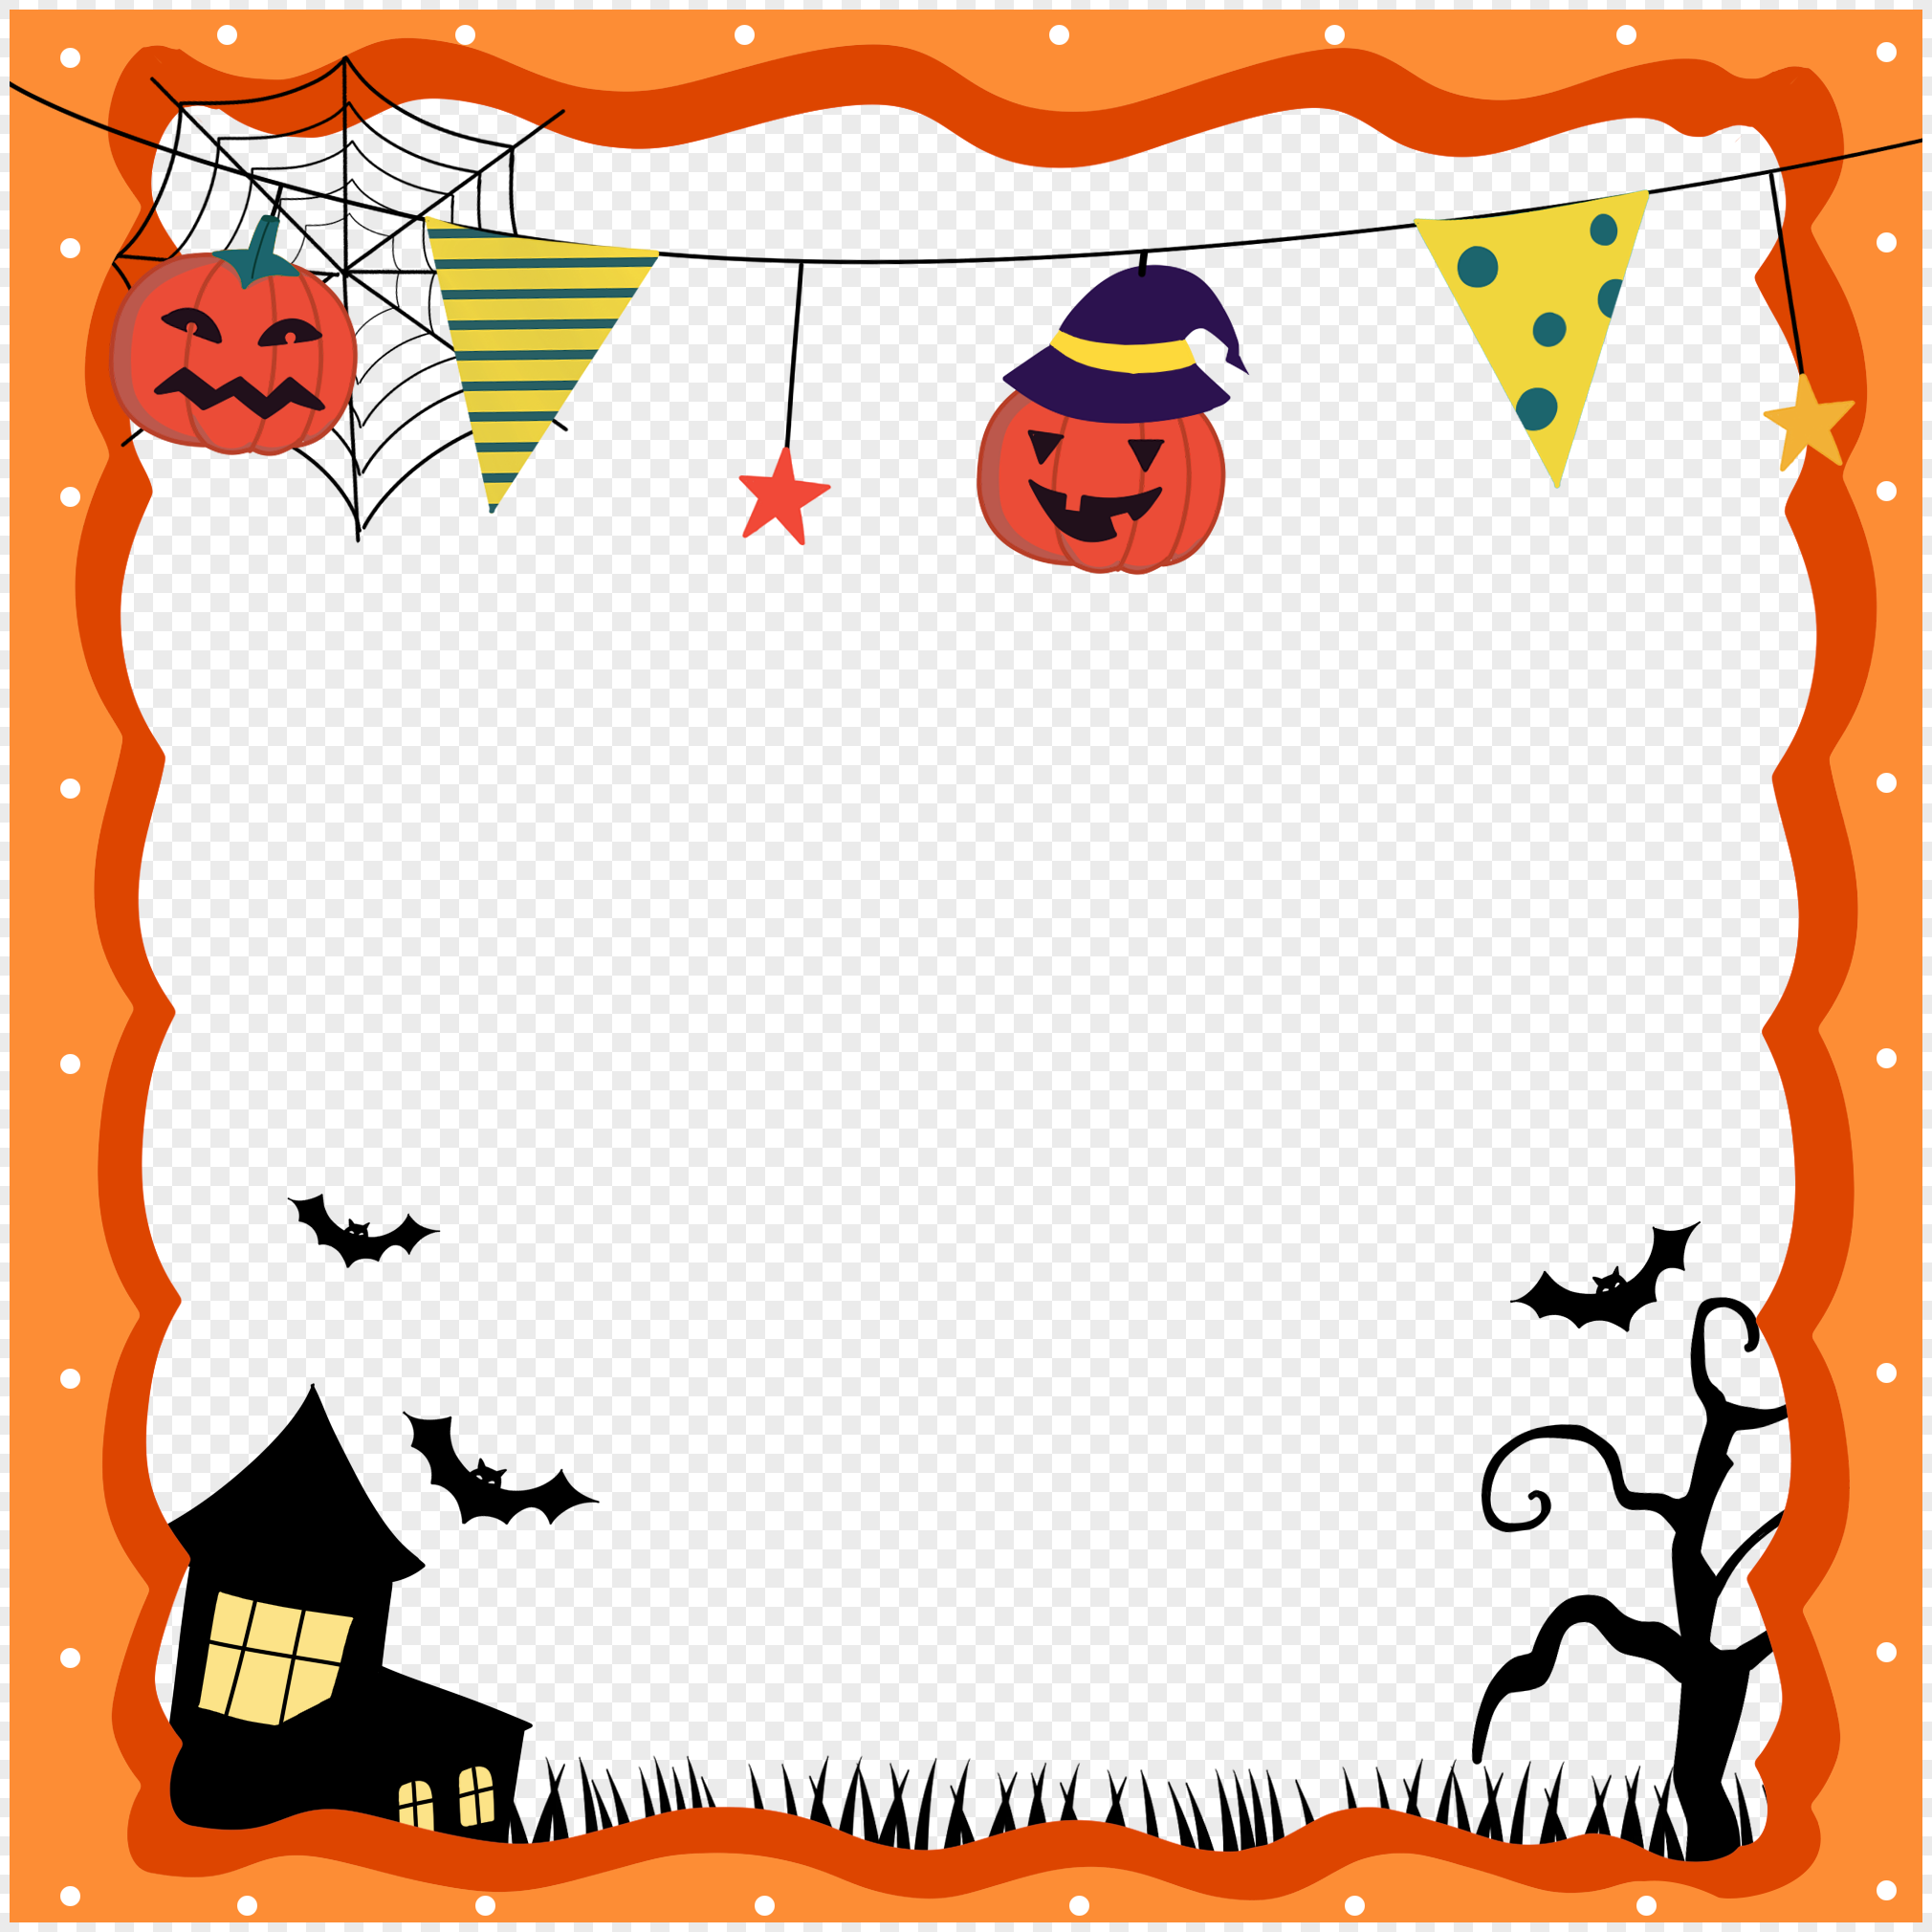 Halloween Border PNG Image & PSD File Free Download Lovepik 401636921